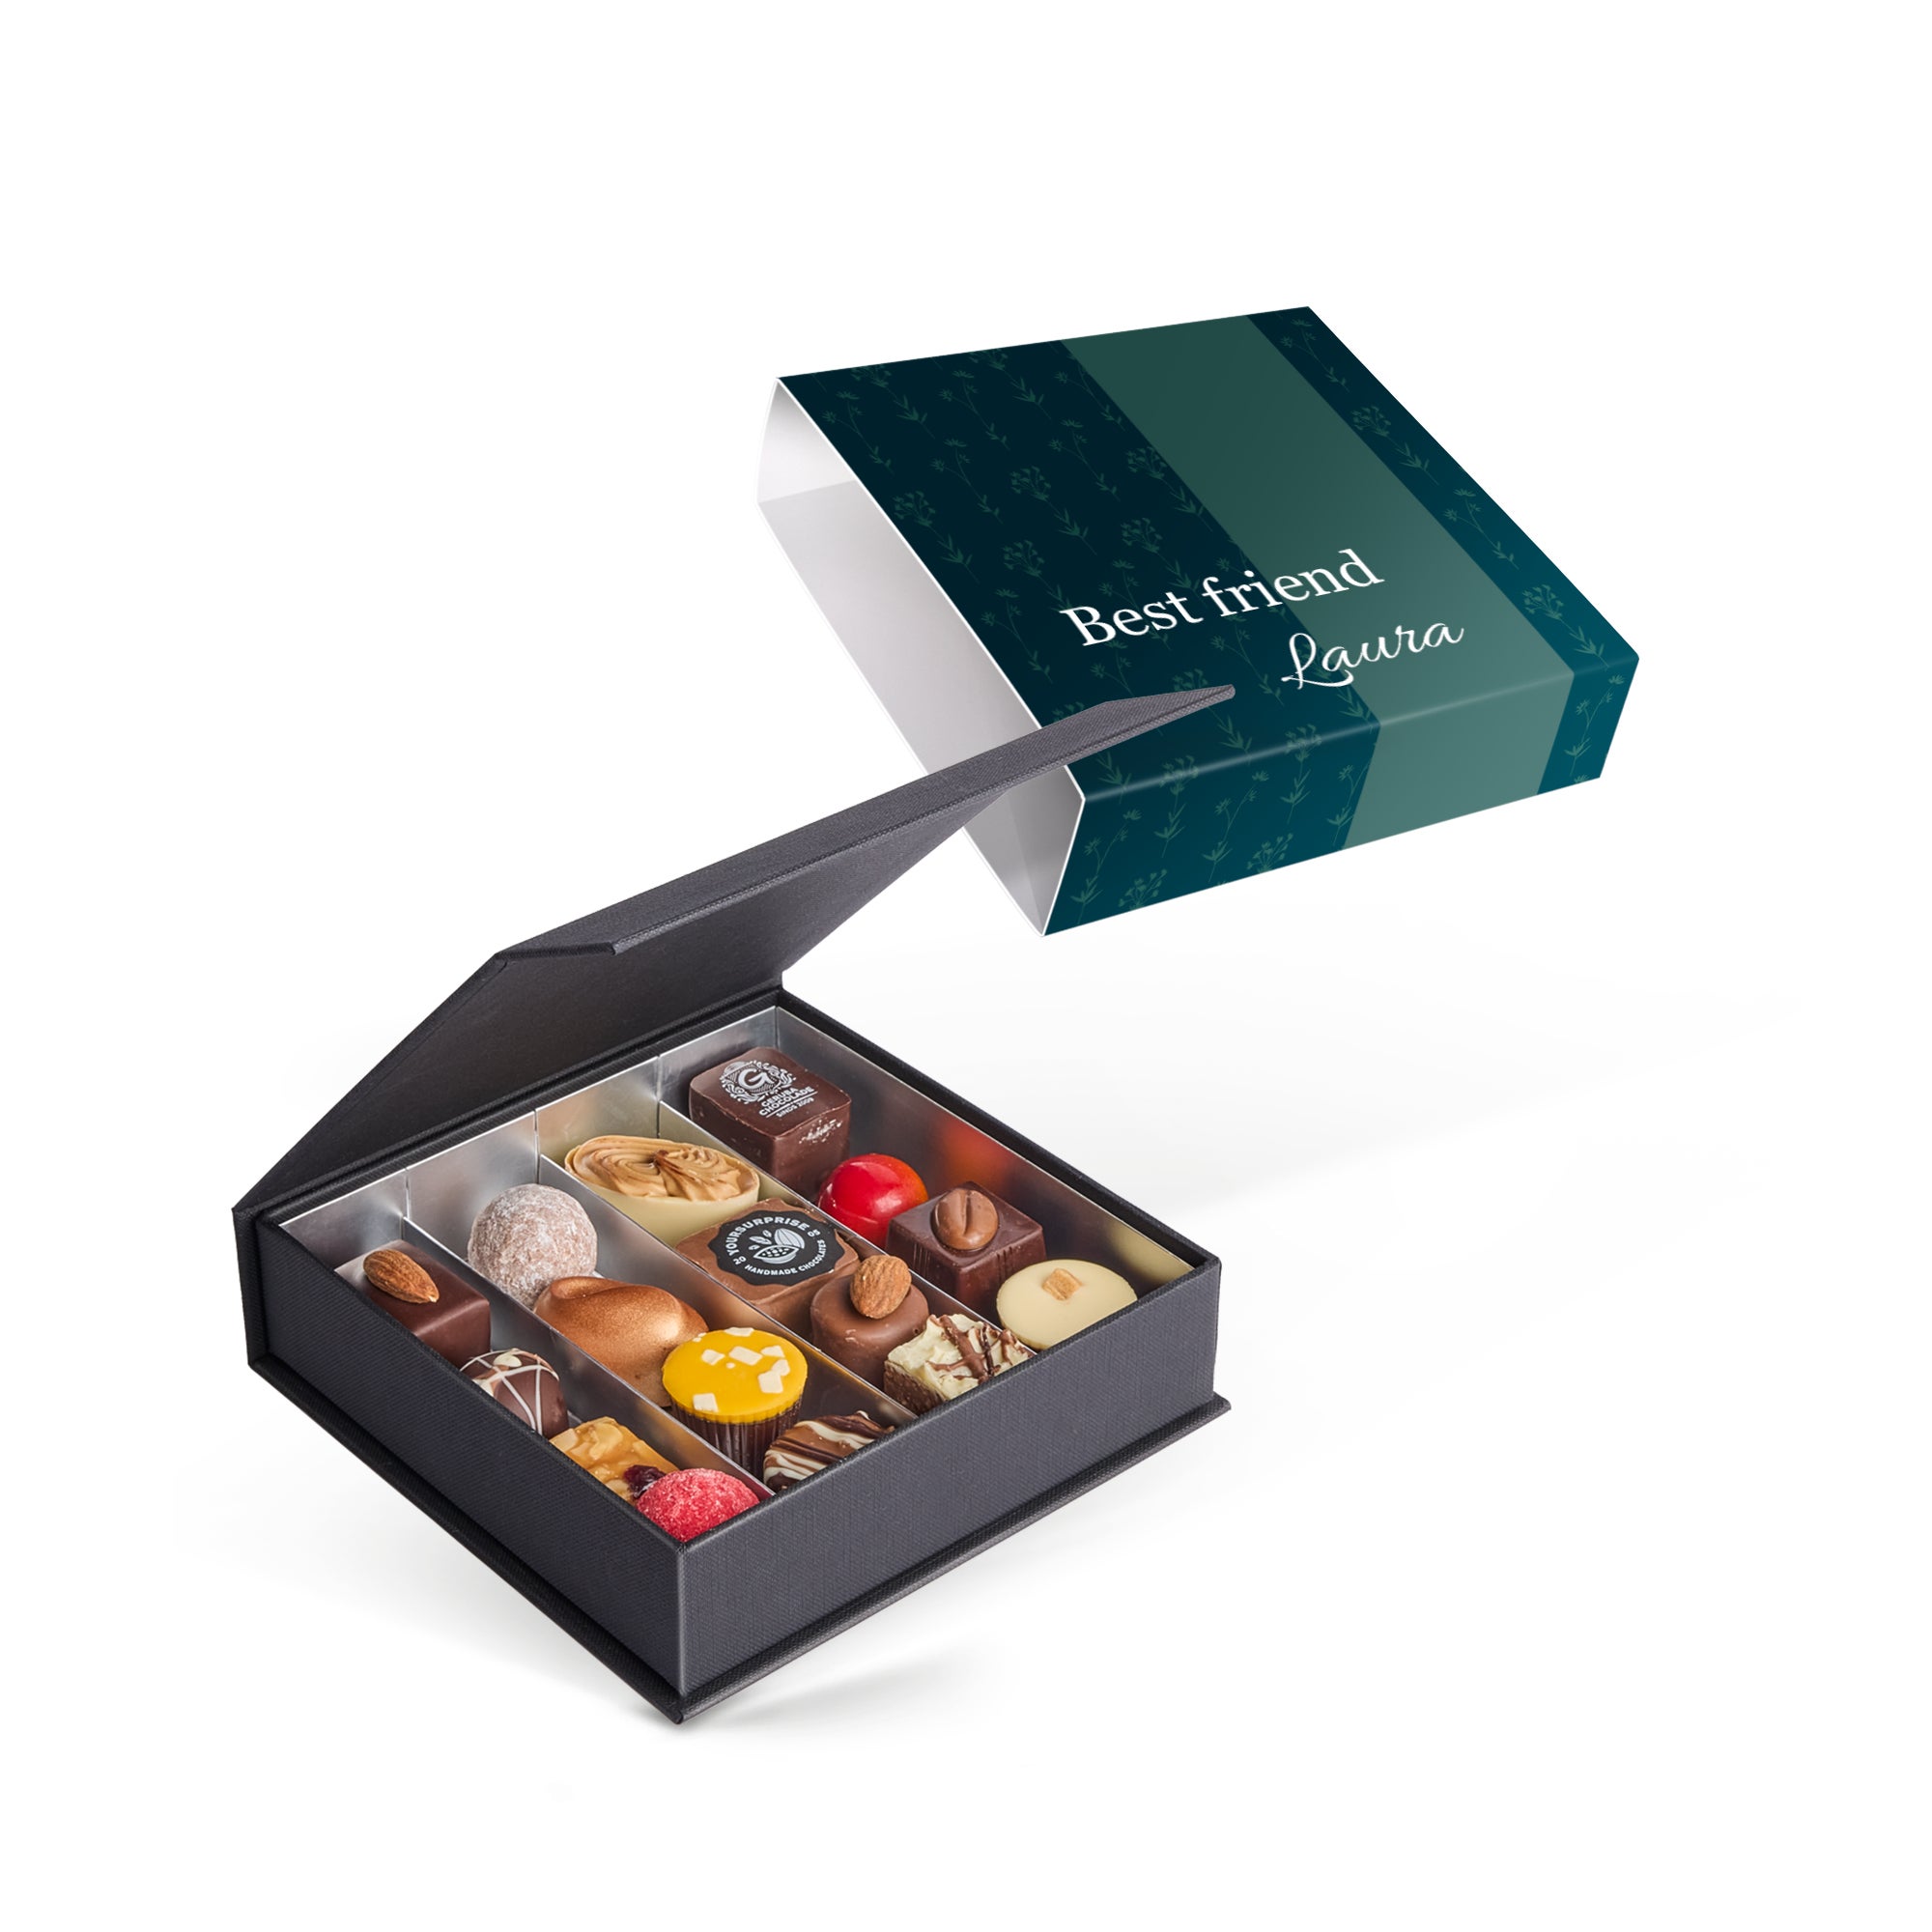 Personalised chocolates in gift box (16 chocolates)